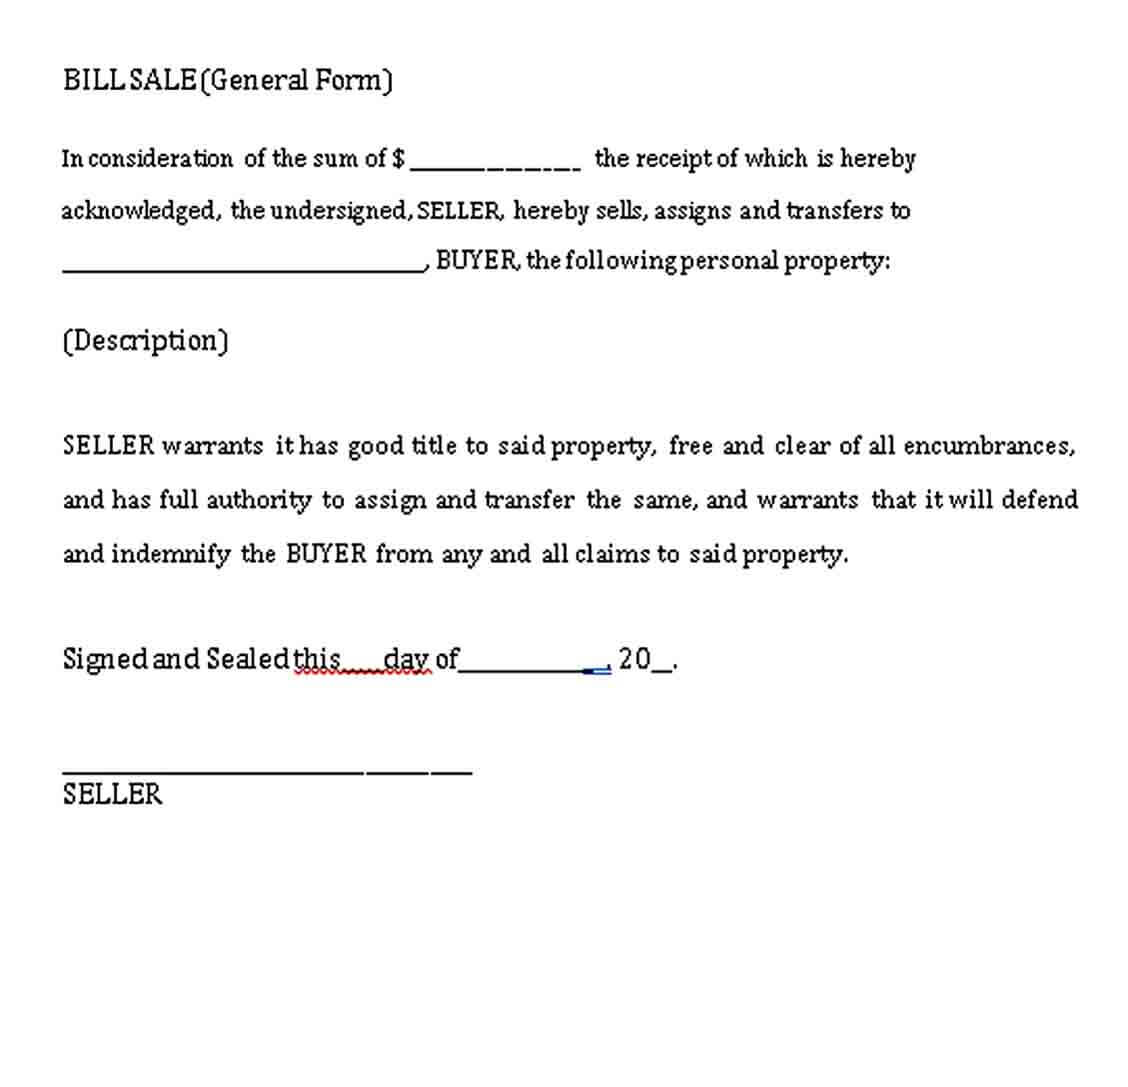 Sample general bill of sale template